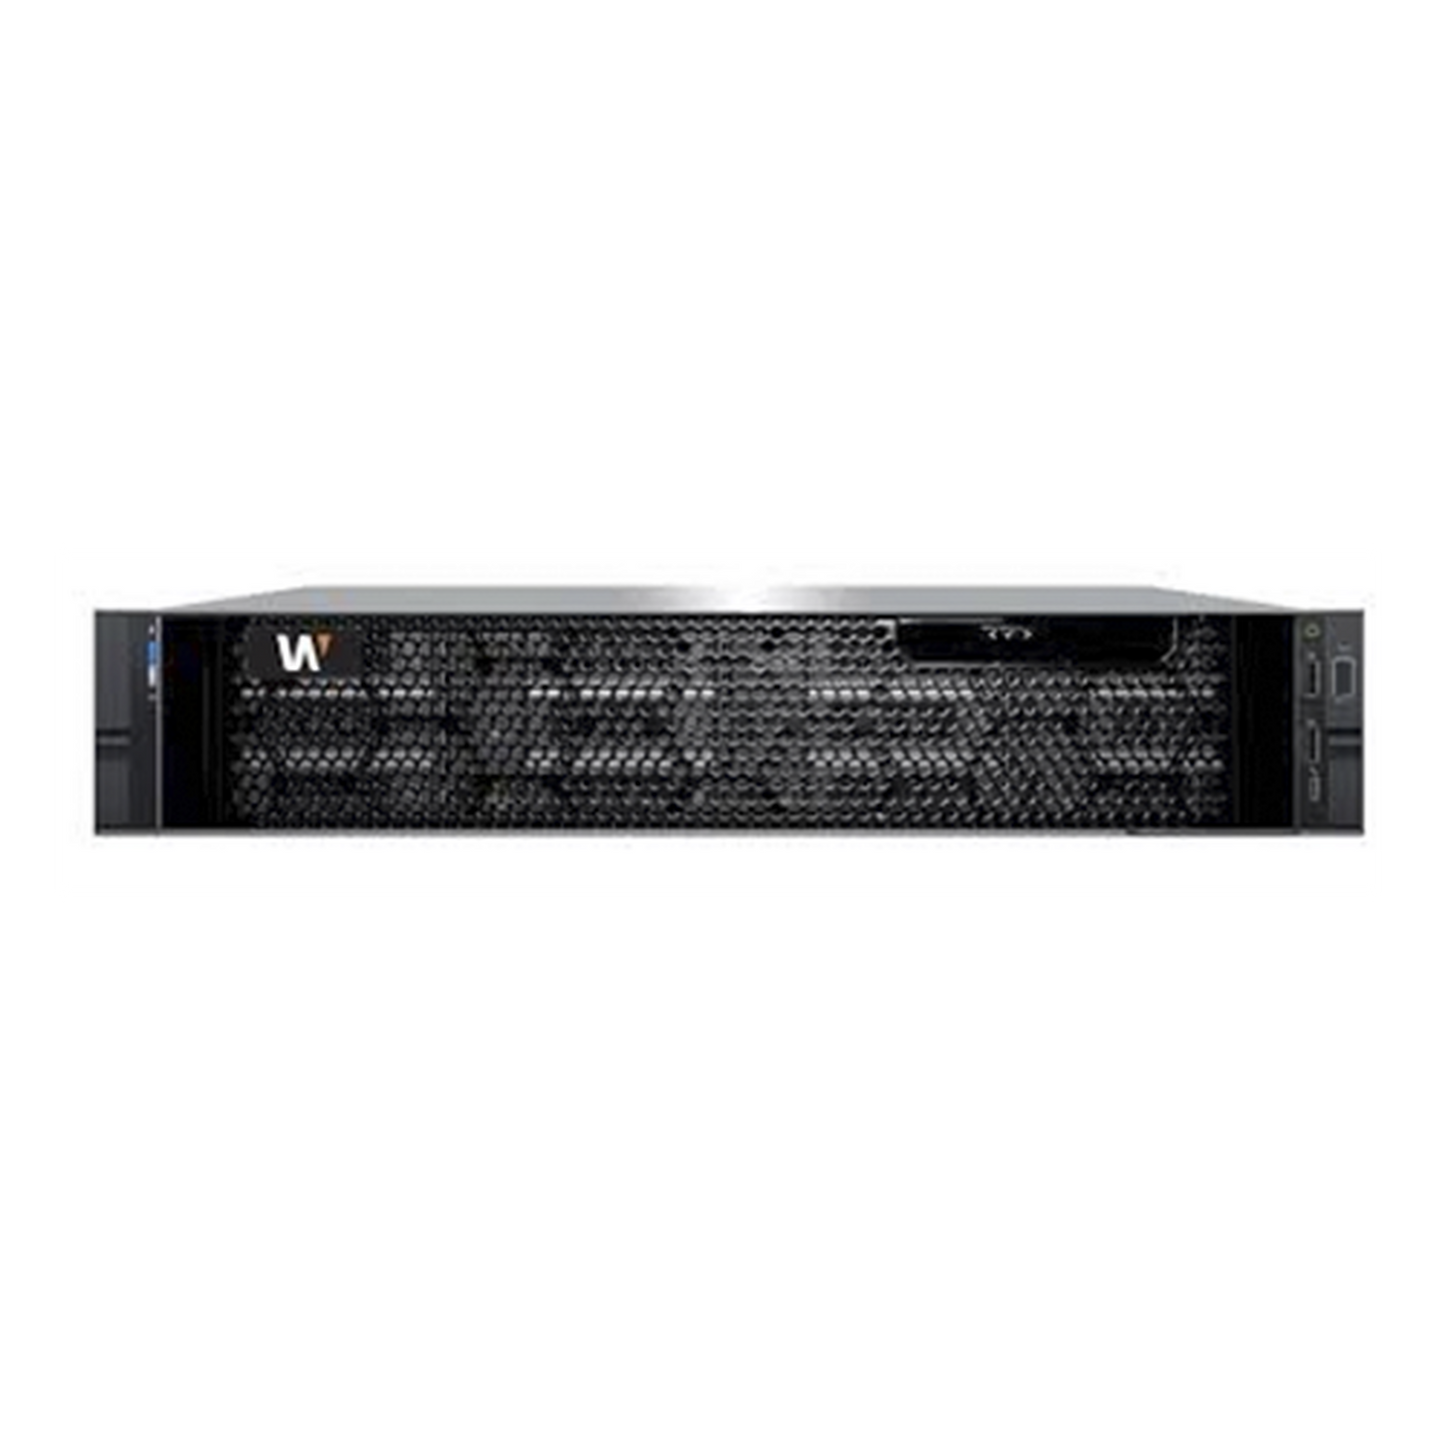 NVR Wisenet WAVE basada en Linux / Montable en Rack 2U / Incluye licencia WAVE-PRO-04 / 470 Mbps throughput / Incluye 108 TB para almacenamiento